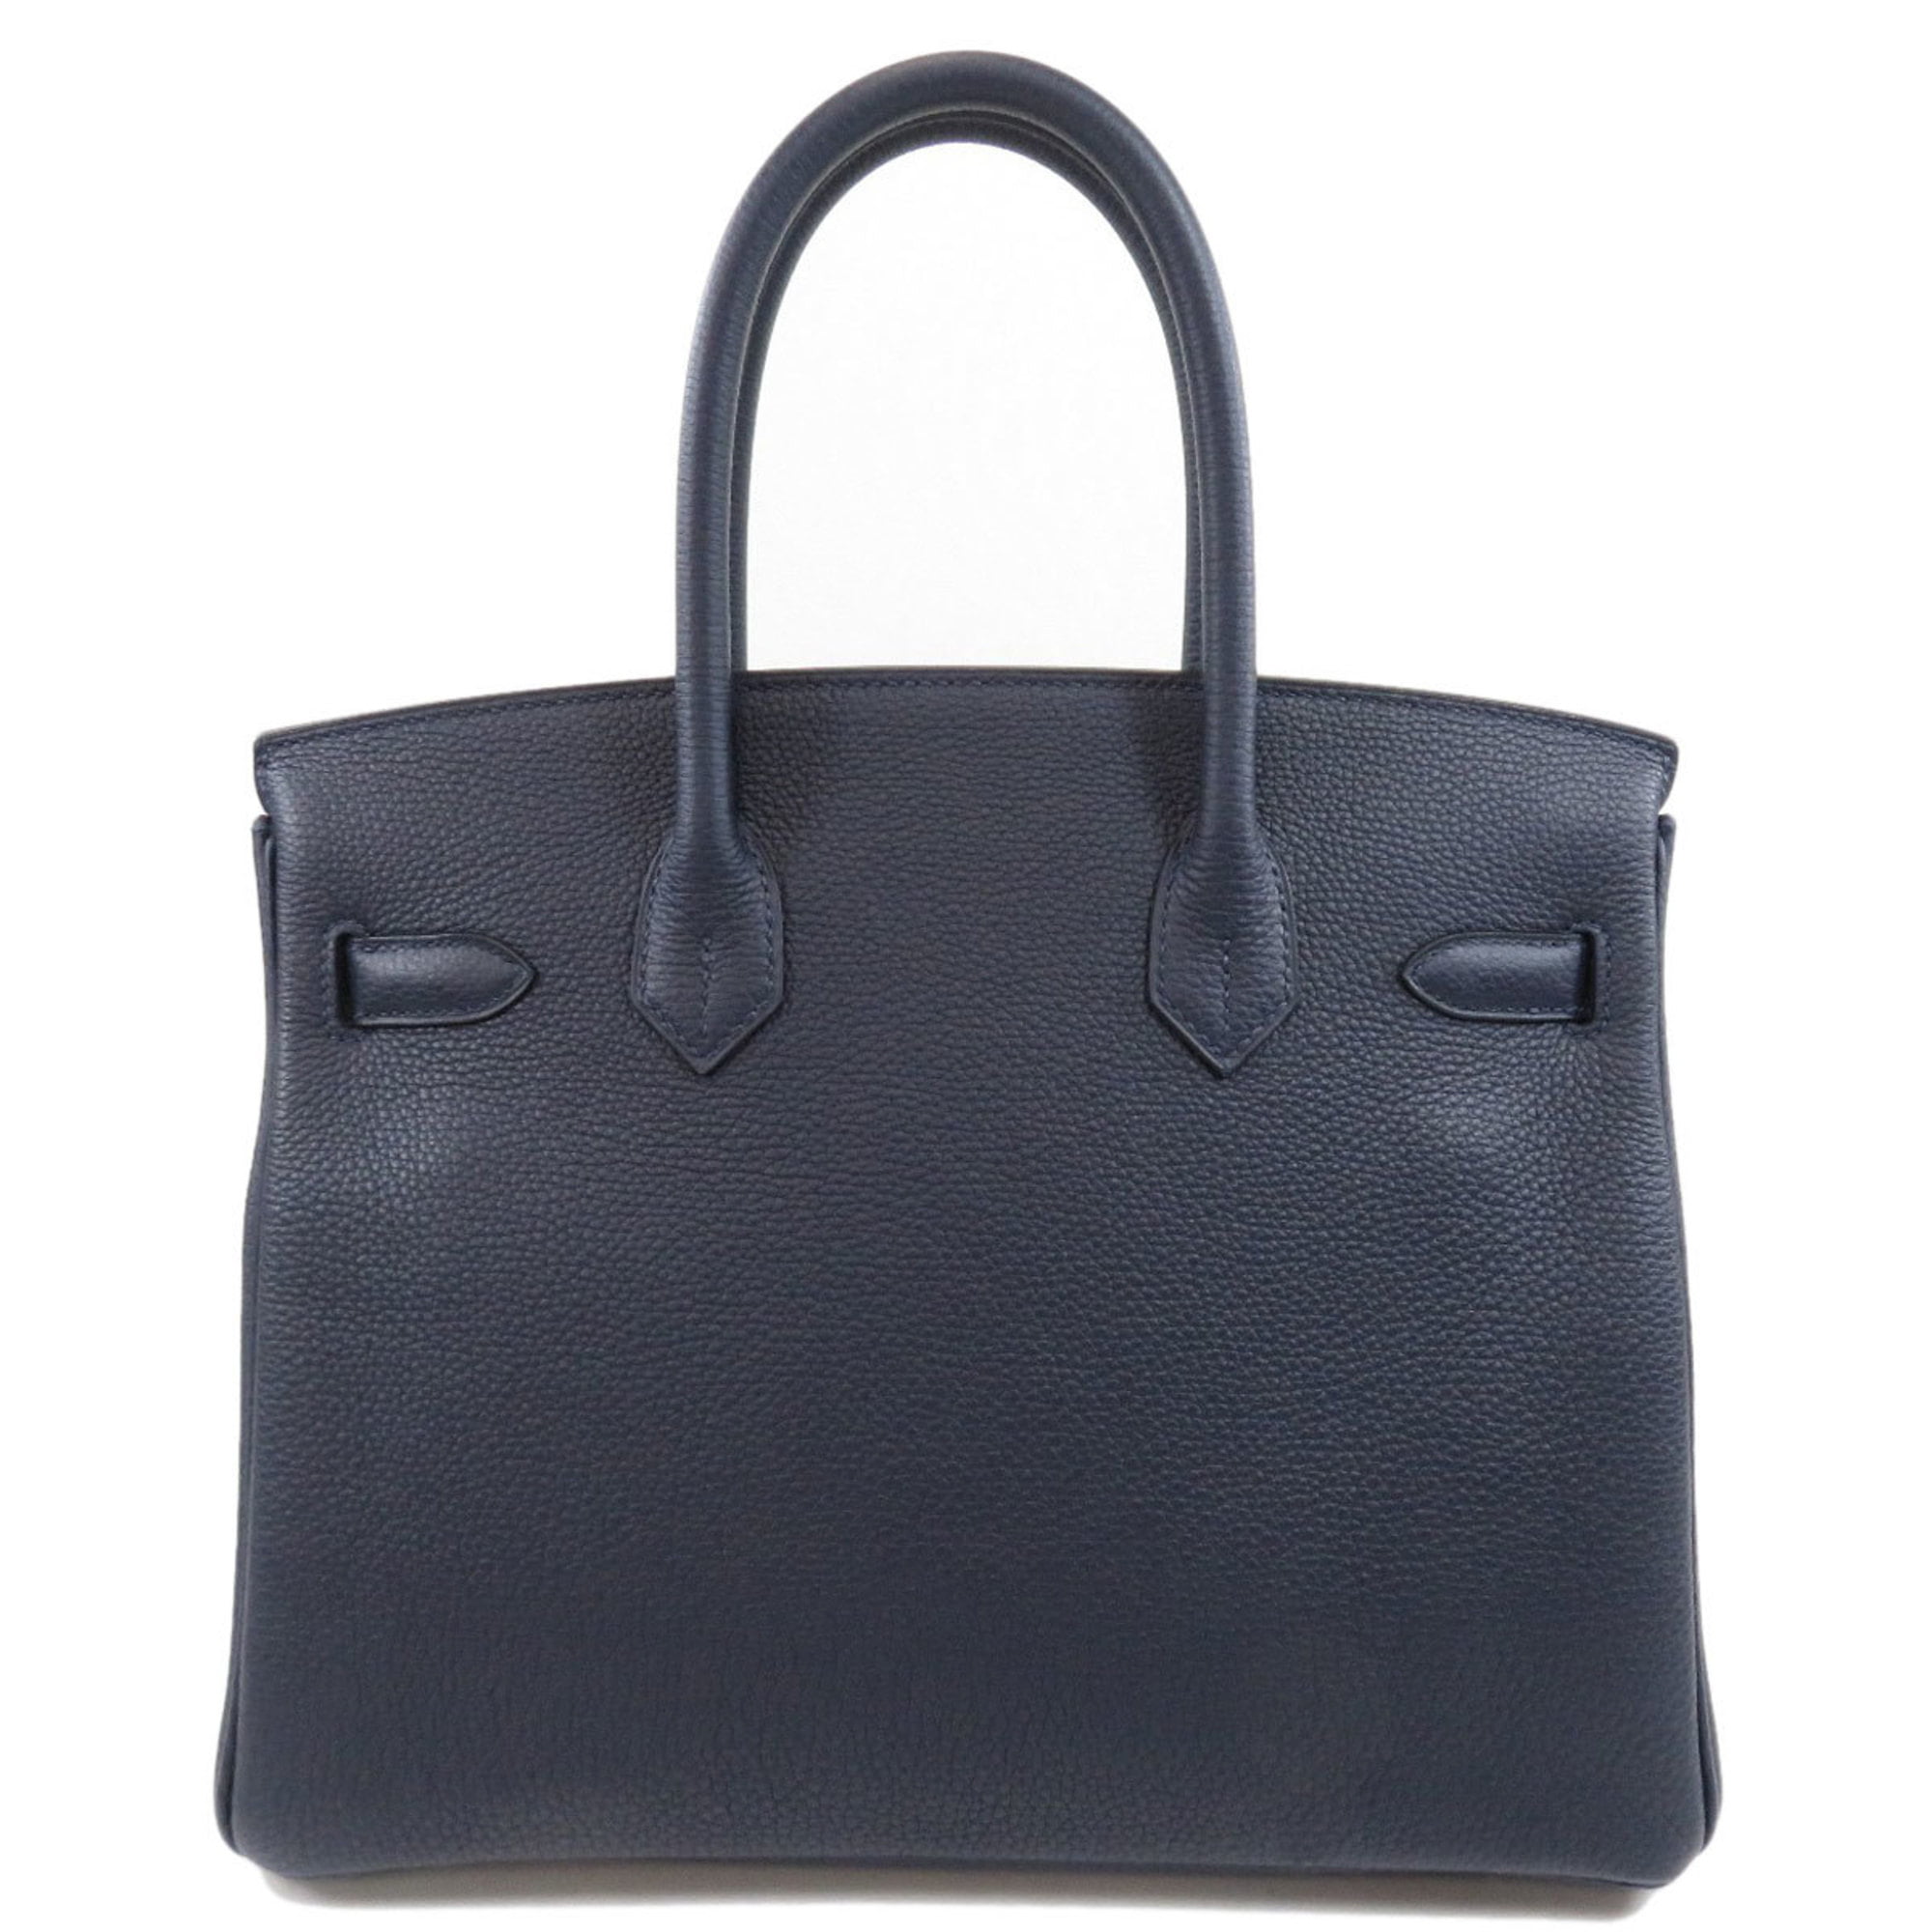 Hermès pre-owned Birkin 35 handbag - Black